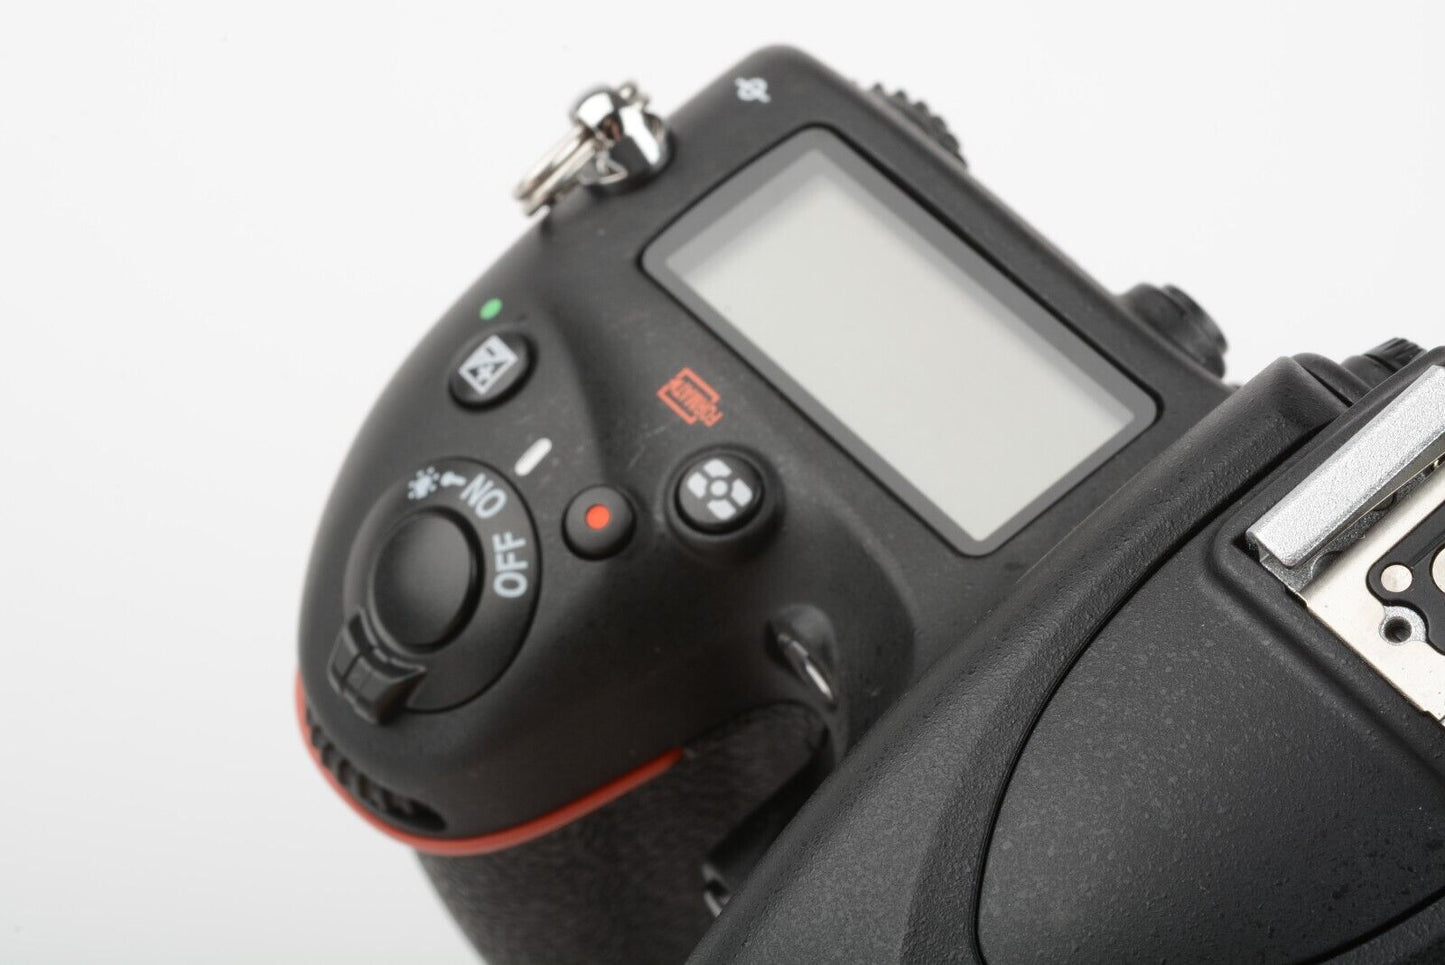 Nikon D750 DSLR Body 24.3MP, 2batts+charger+strap+manual 45,020 Acts.